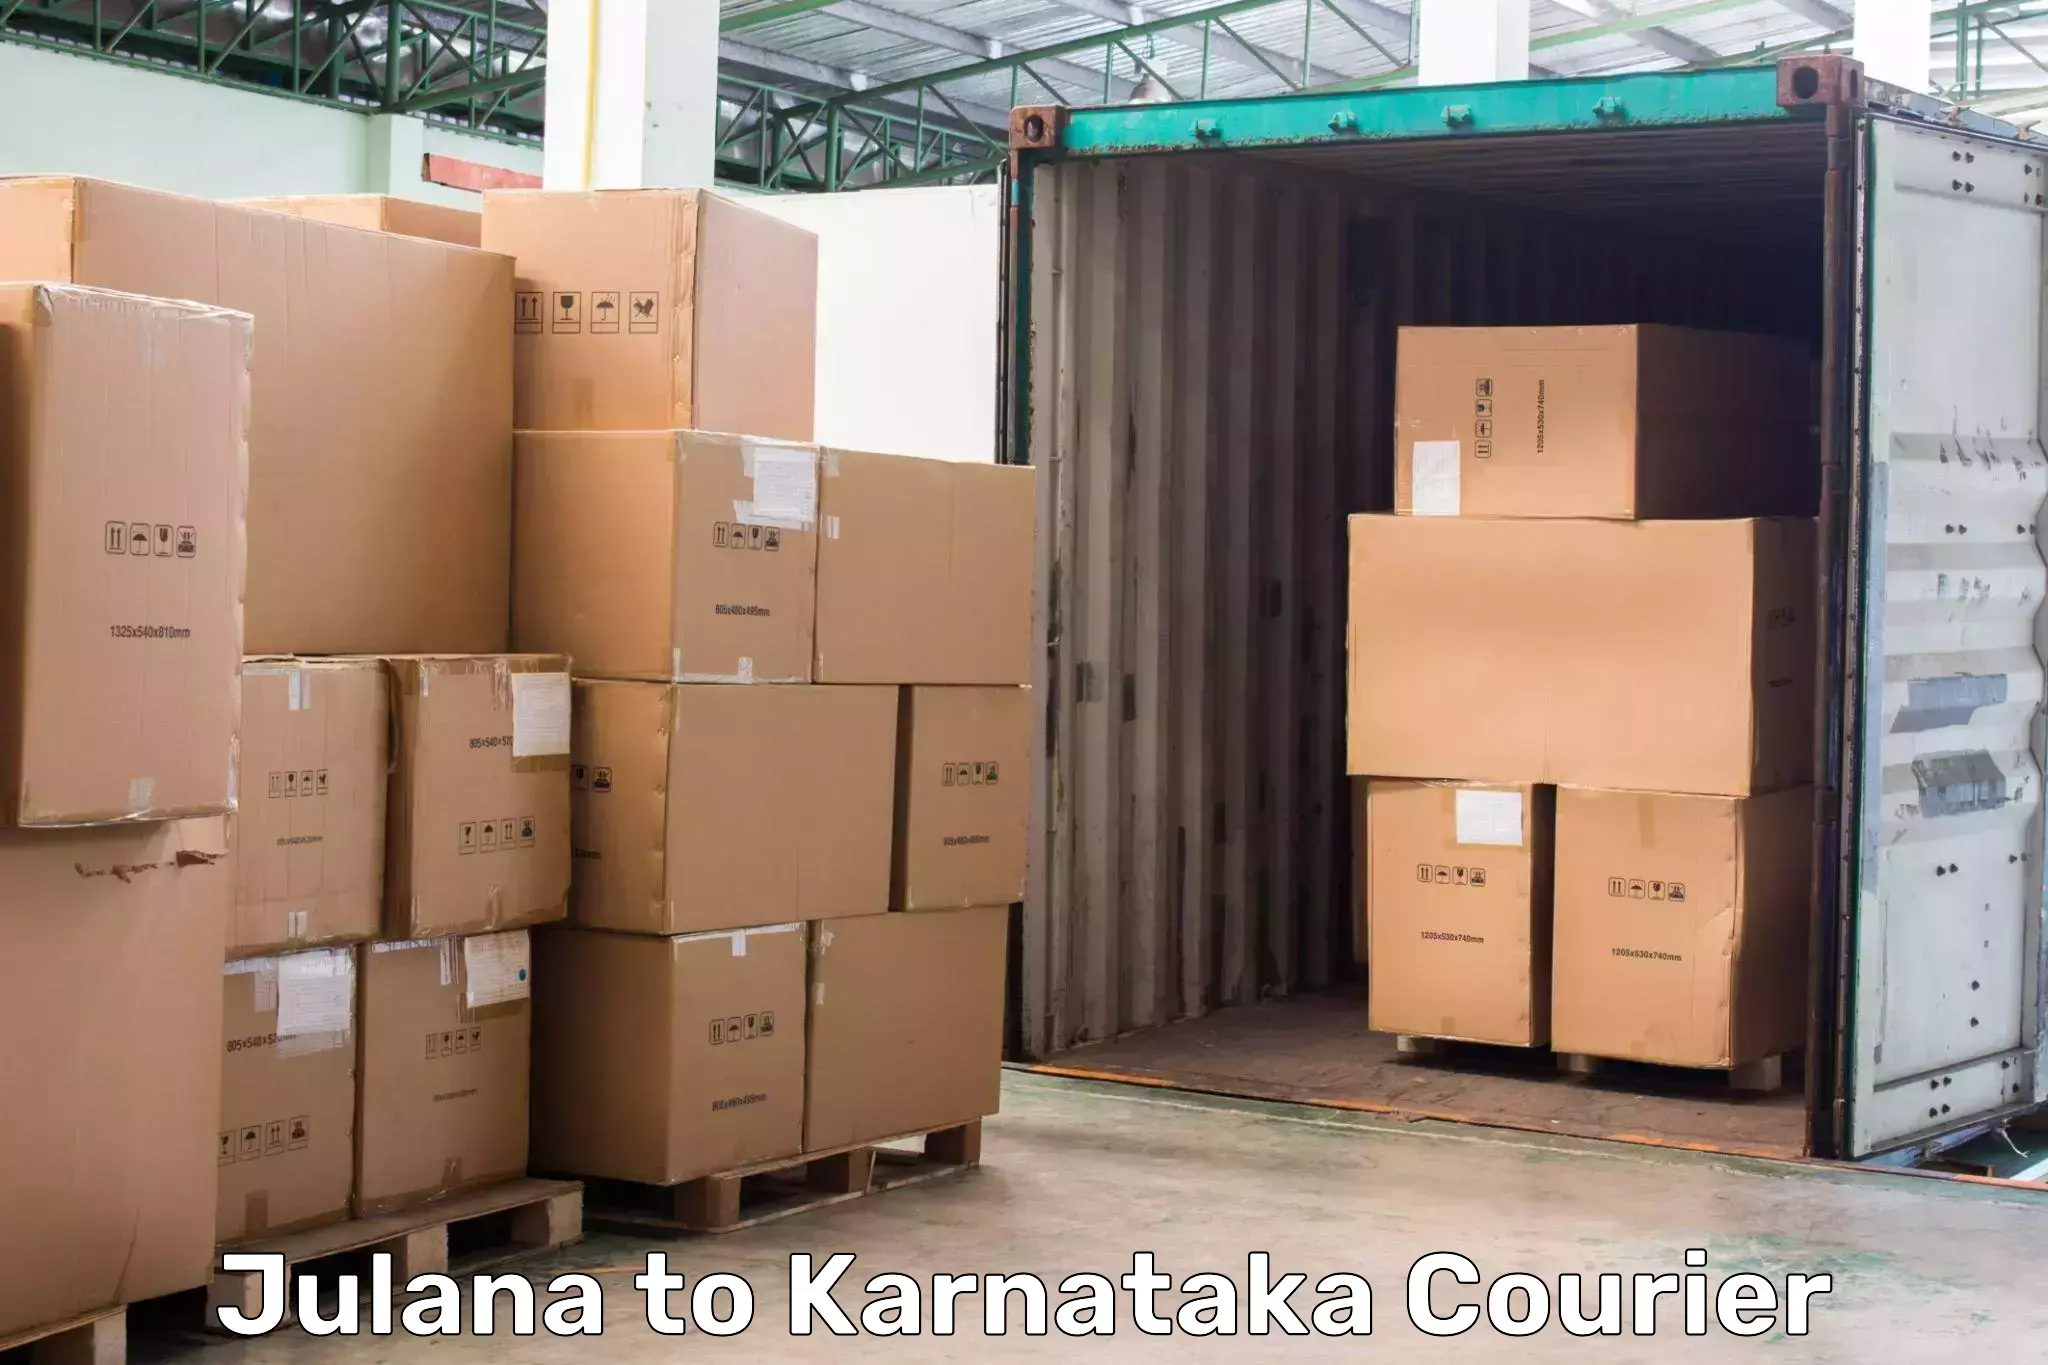 Courier service comparison Julana to Karnataka